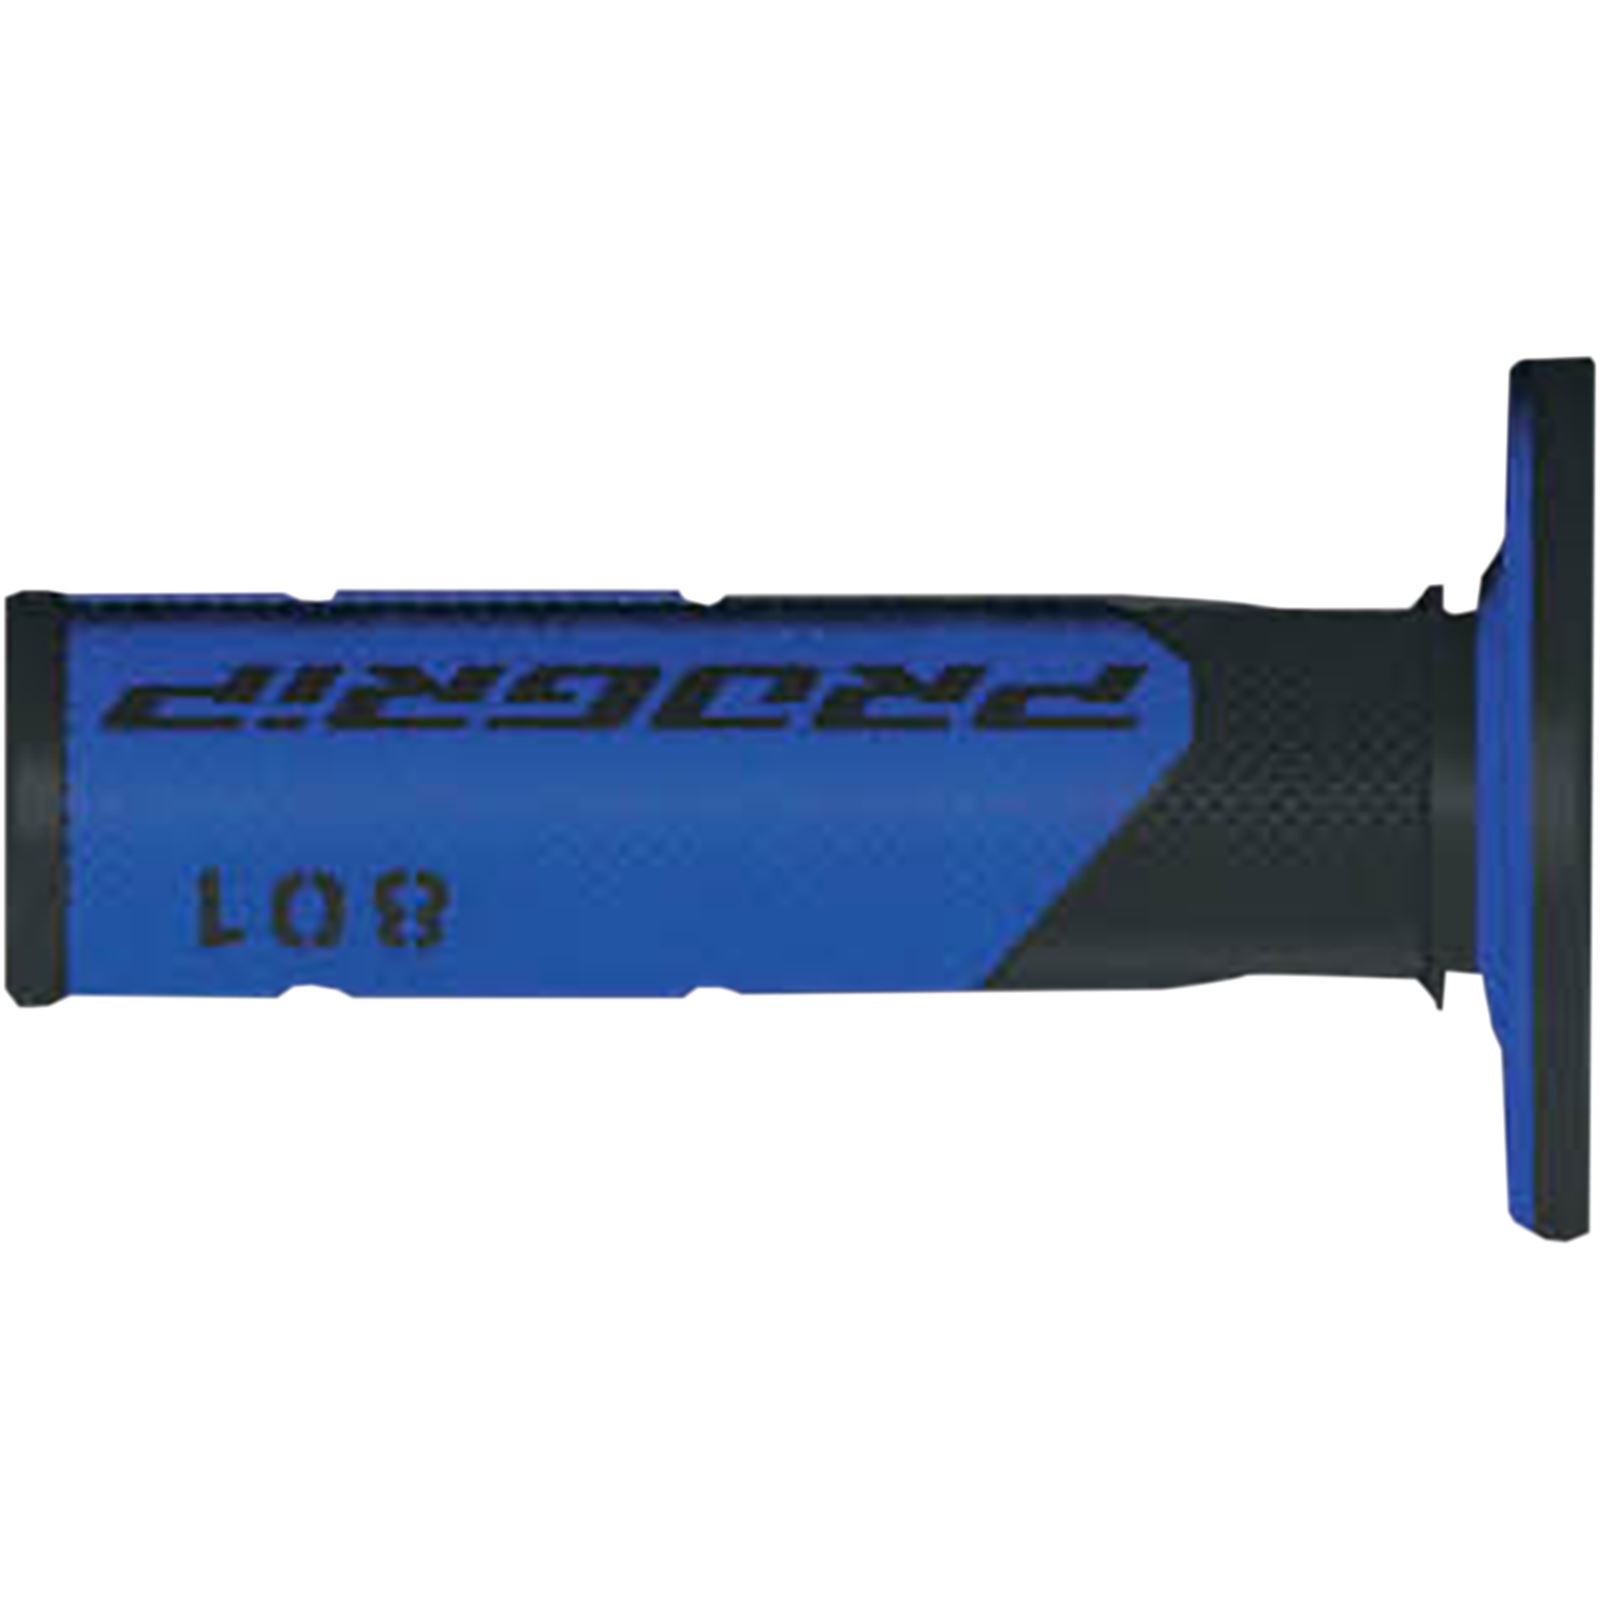 Pro Grip Black/Blue Pro Grip 801 Grips